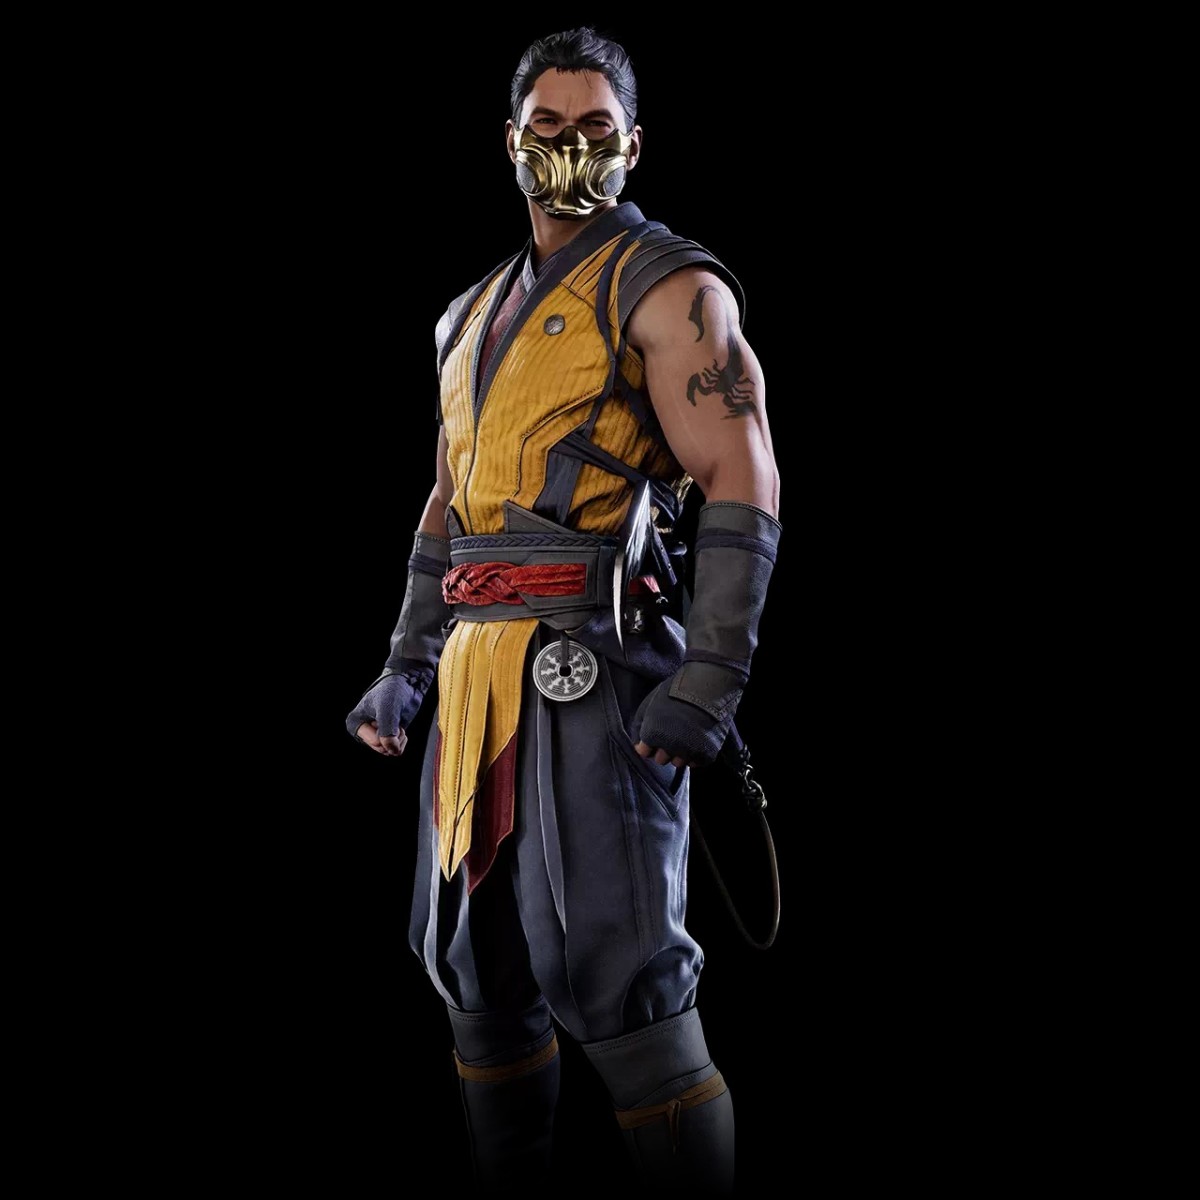 Mortal Kombat: Top 10 Liu Kang Fatalities, Ranked